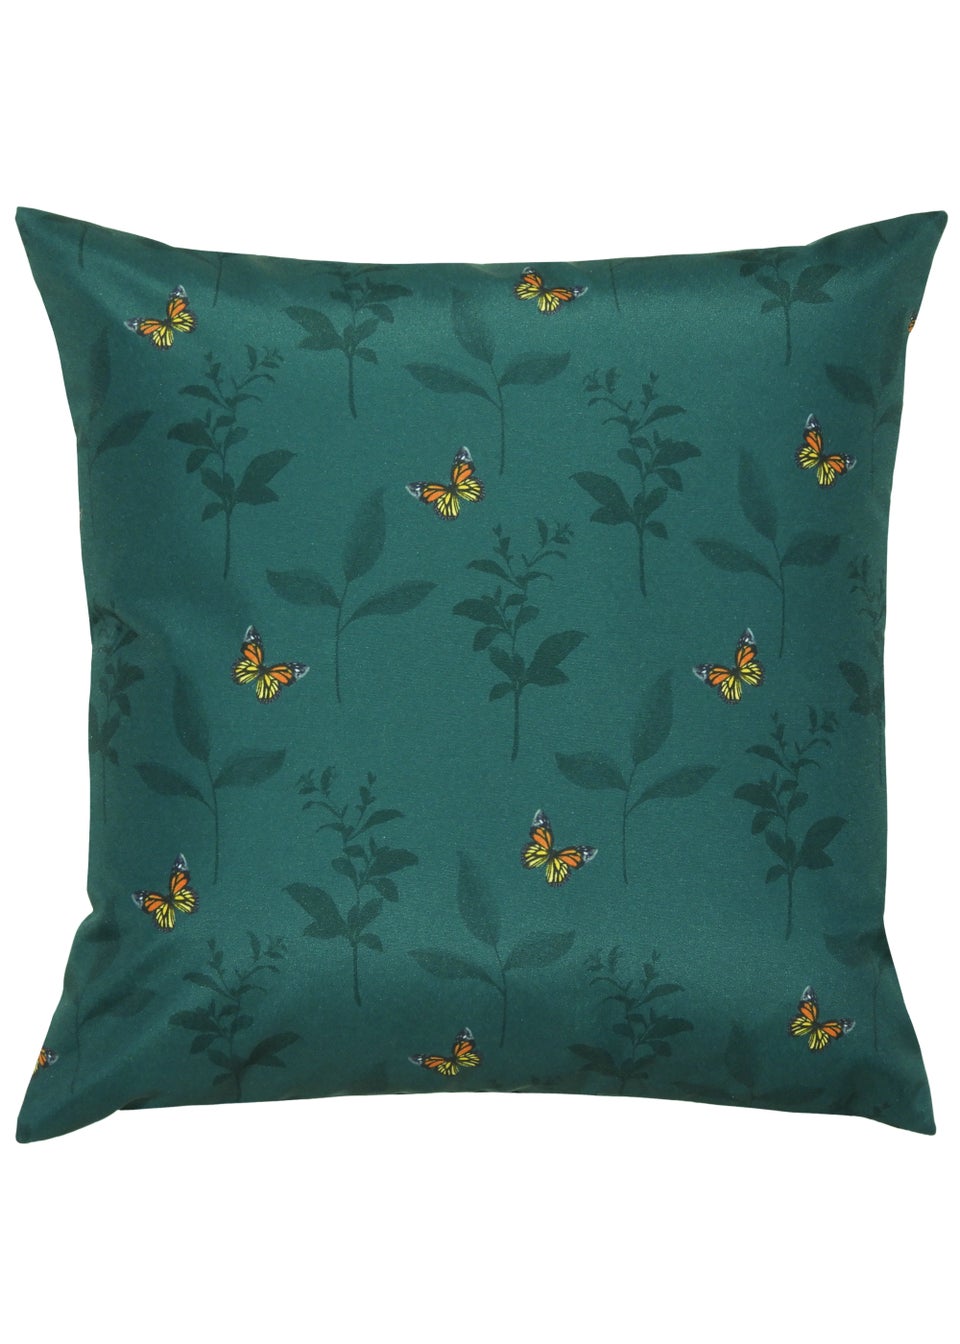 Evans Lichfield Butterflies Outdoor Filled Cushion (43cm x 43cm x 8cm)